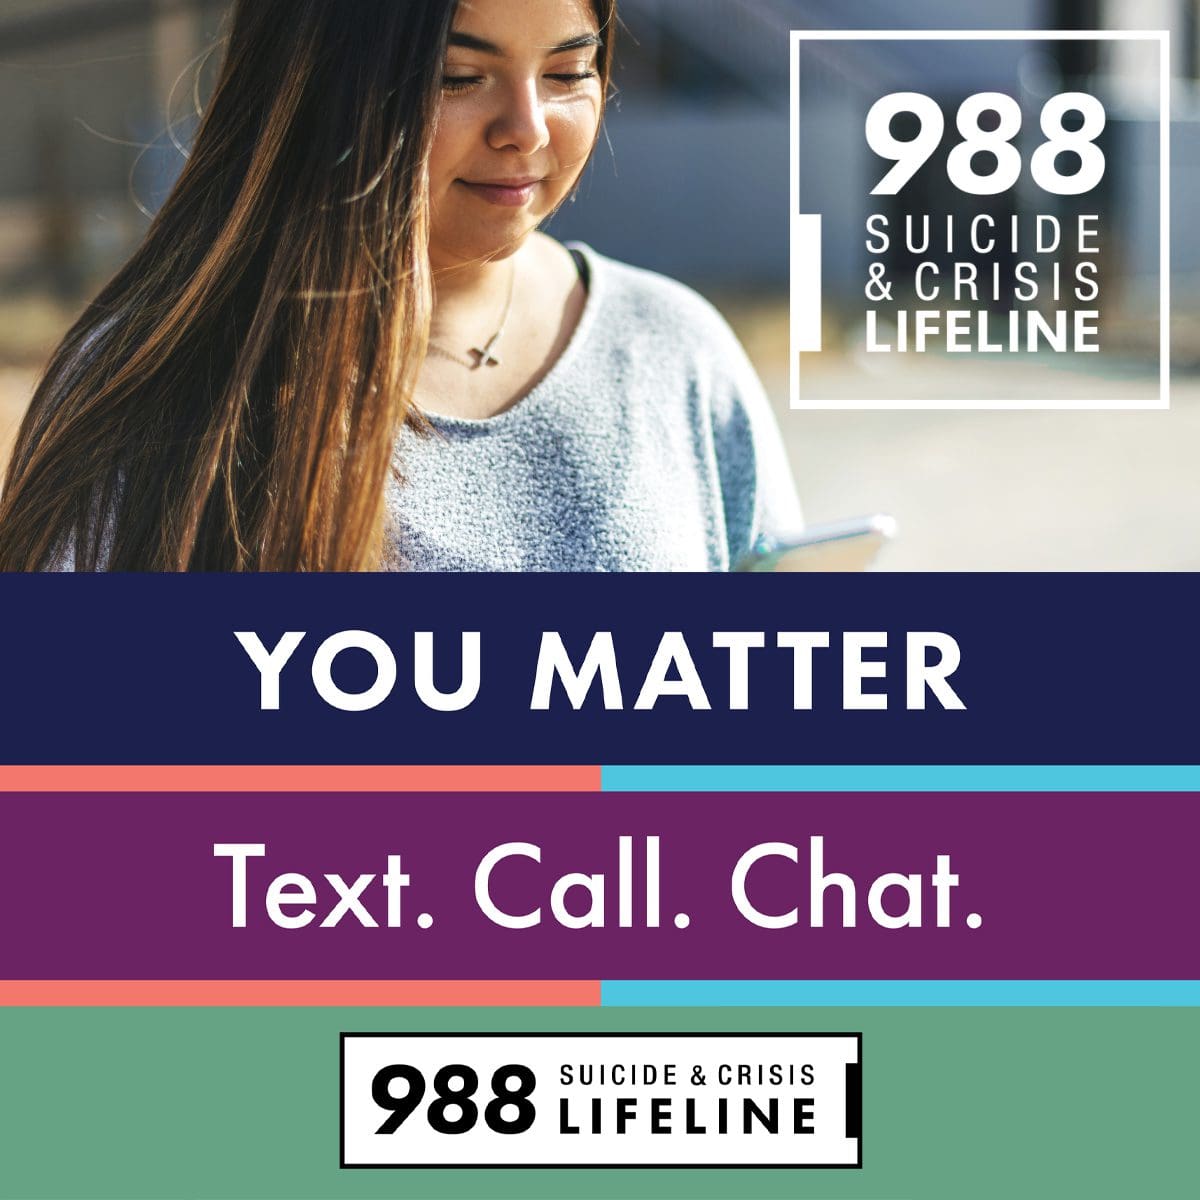 988 Suicide & Crisis LIFELINE - YOU MATTER. Text. Call. Chat. 988.